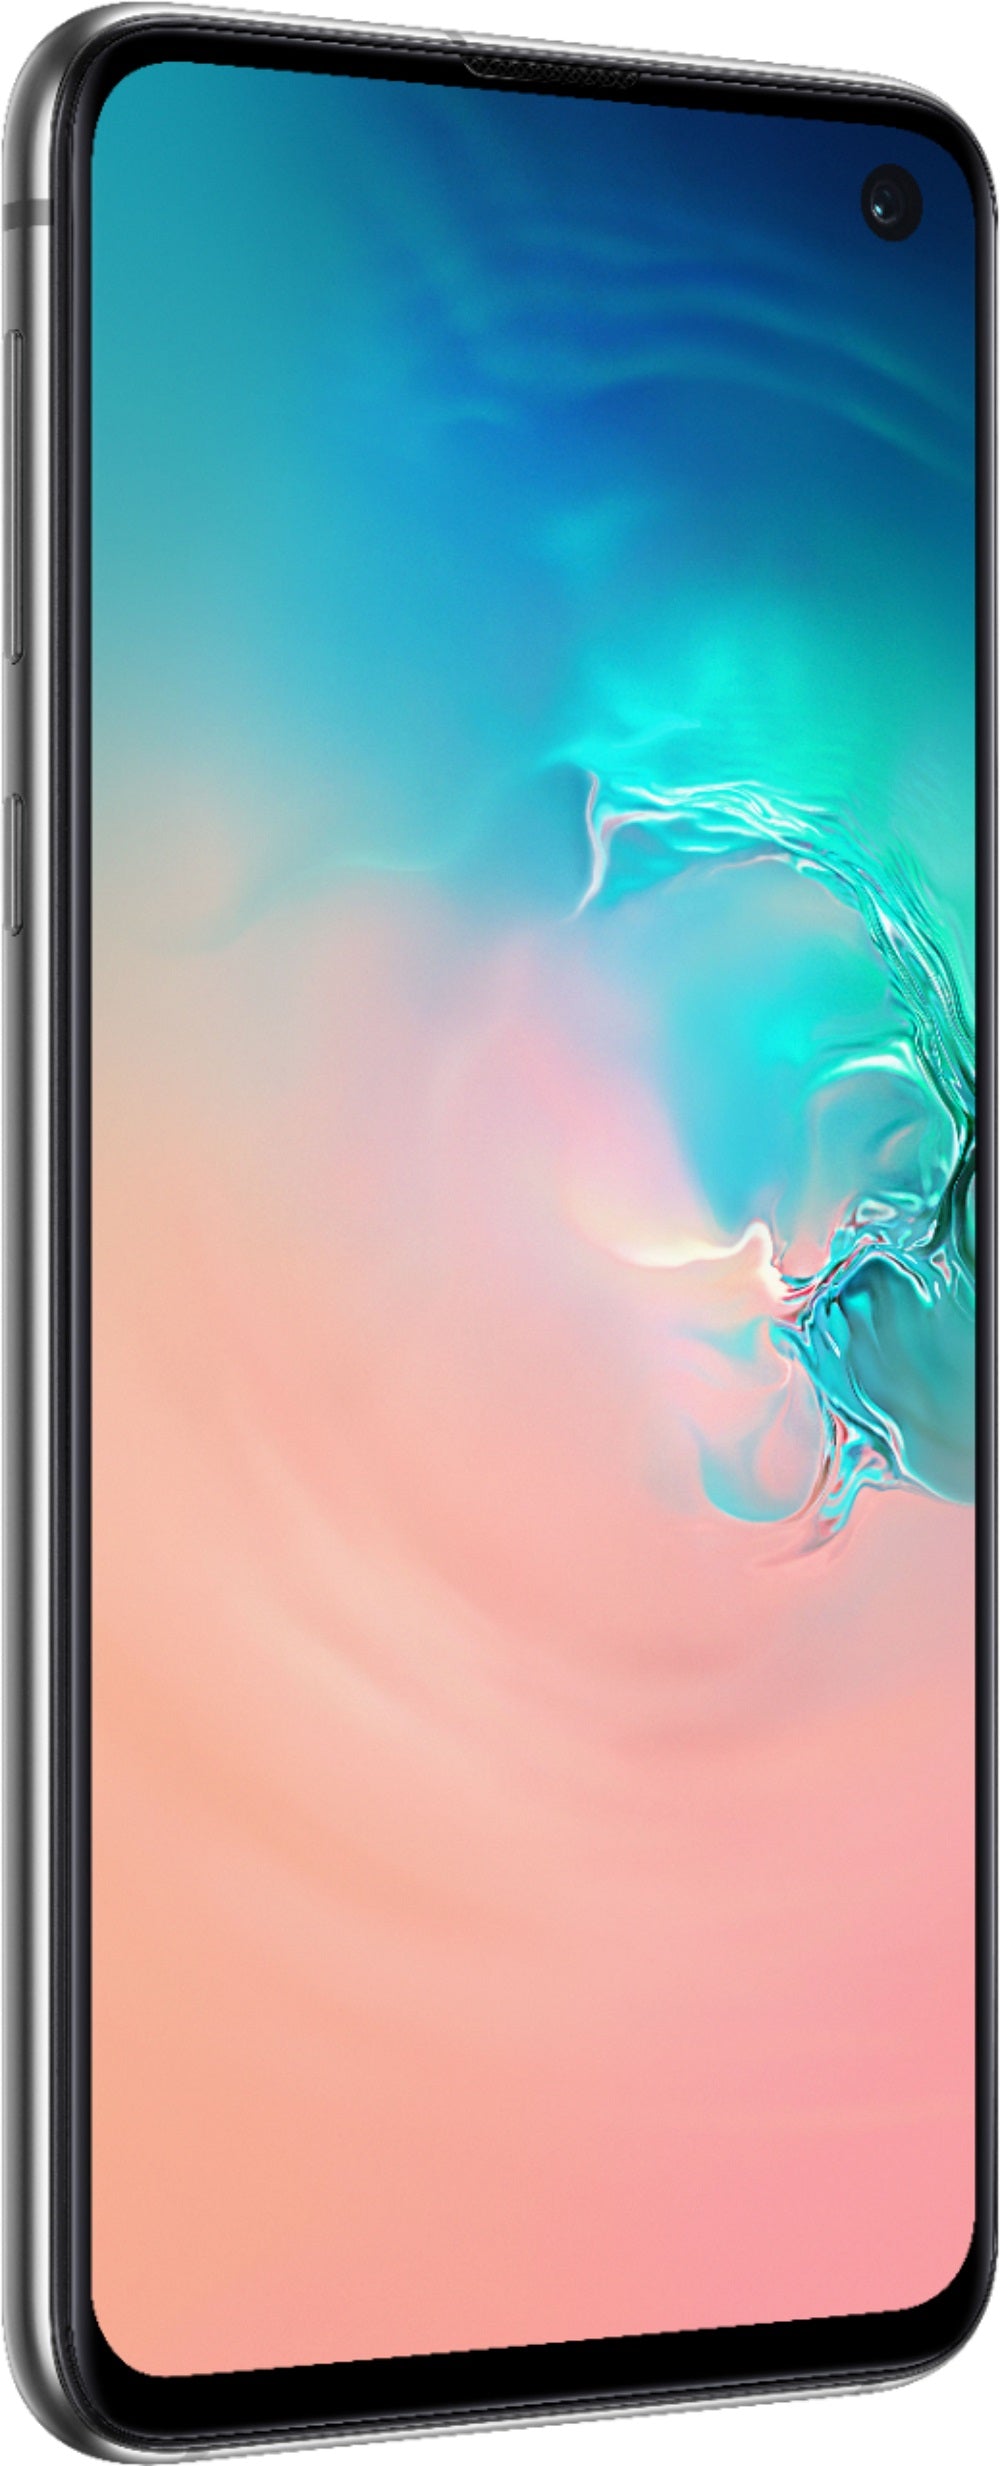 Galaxy S10e 128GB - Prism White - Locked Verizon